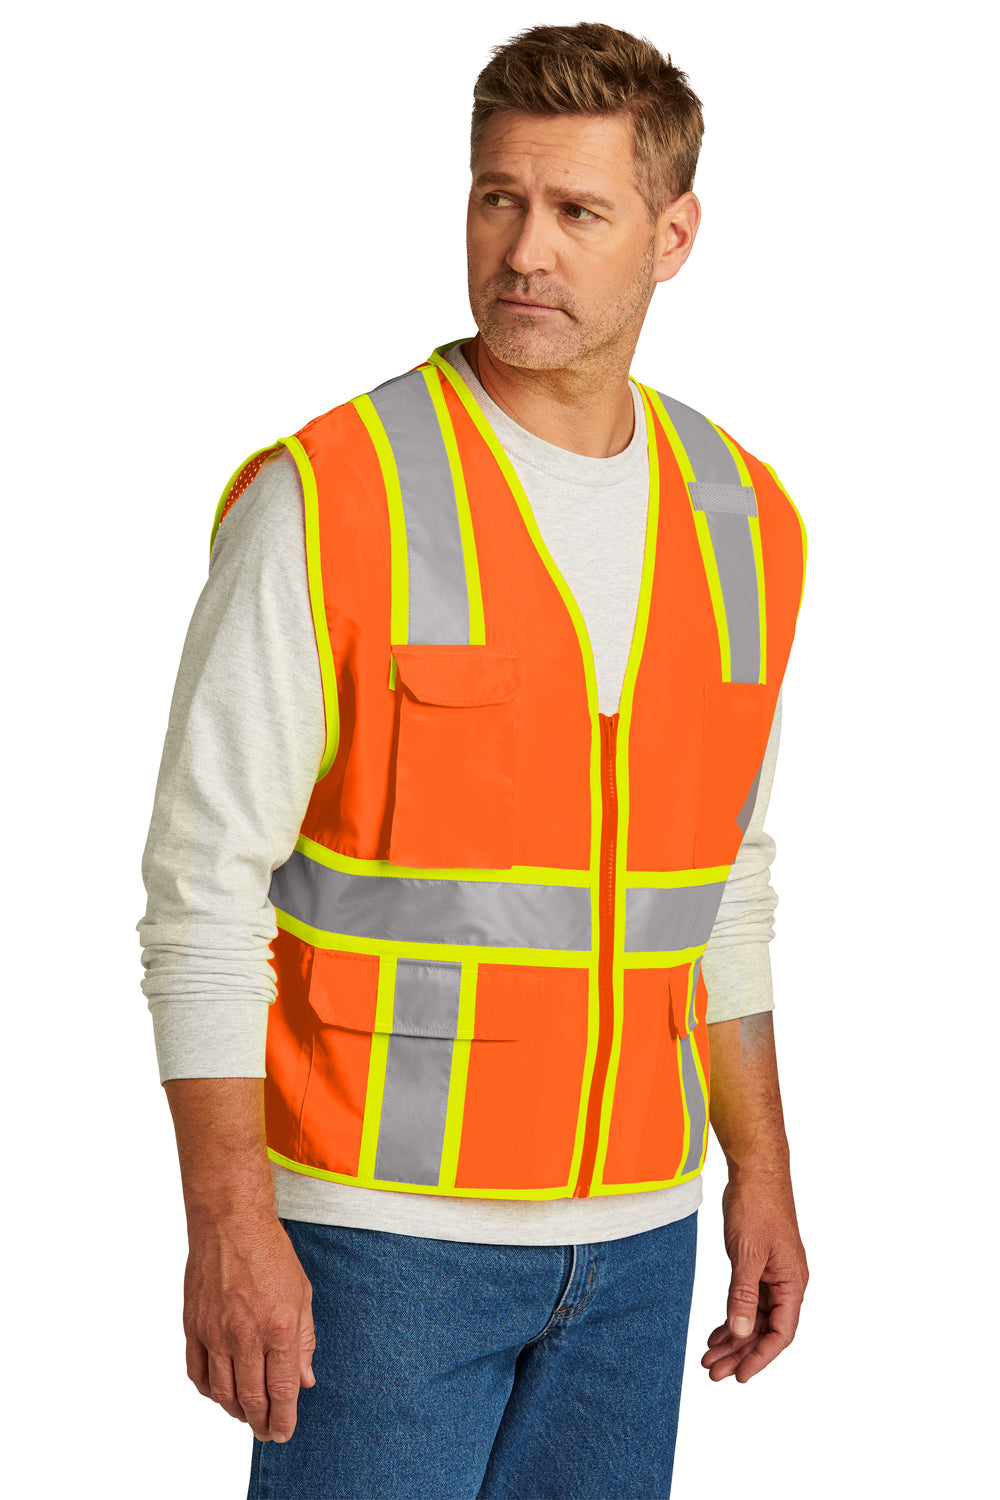 CornerStone CSV105 Mens ANSI 107 Class 2 Surveyor Zipper Vest w/ Pocket Safety Orange 3Q